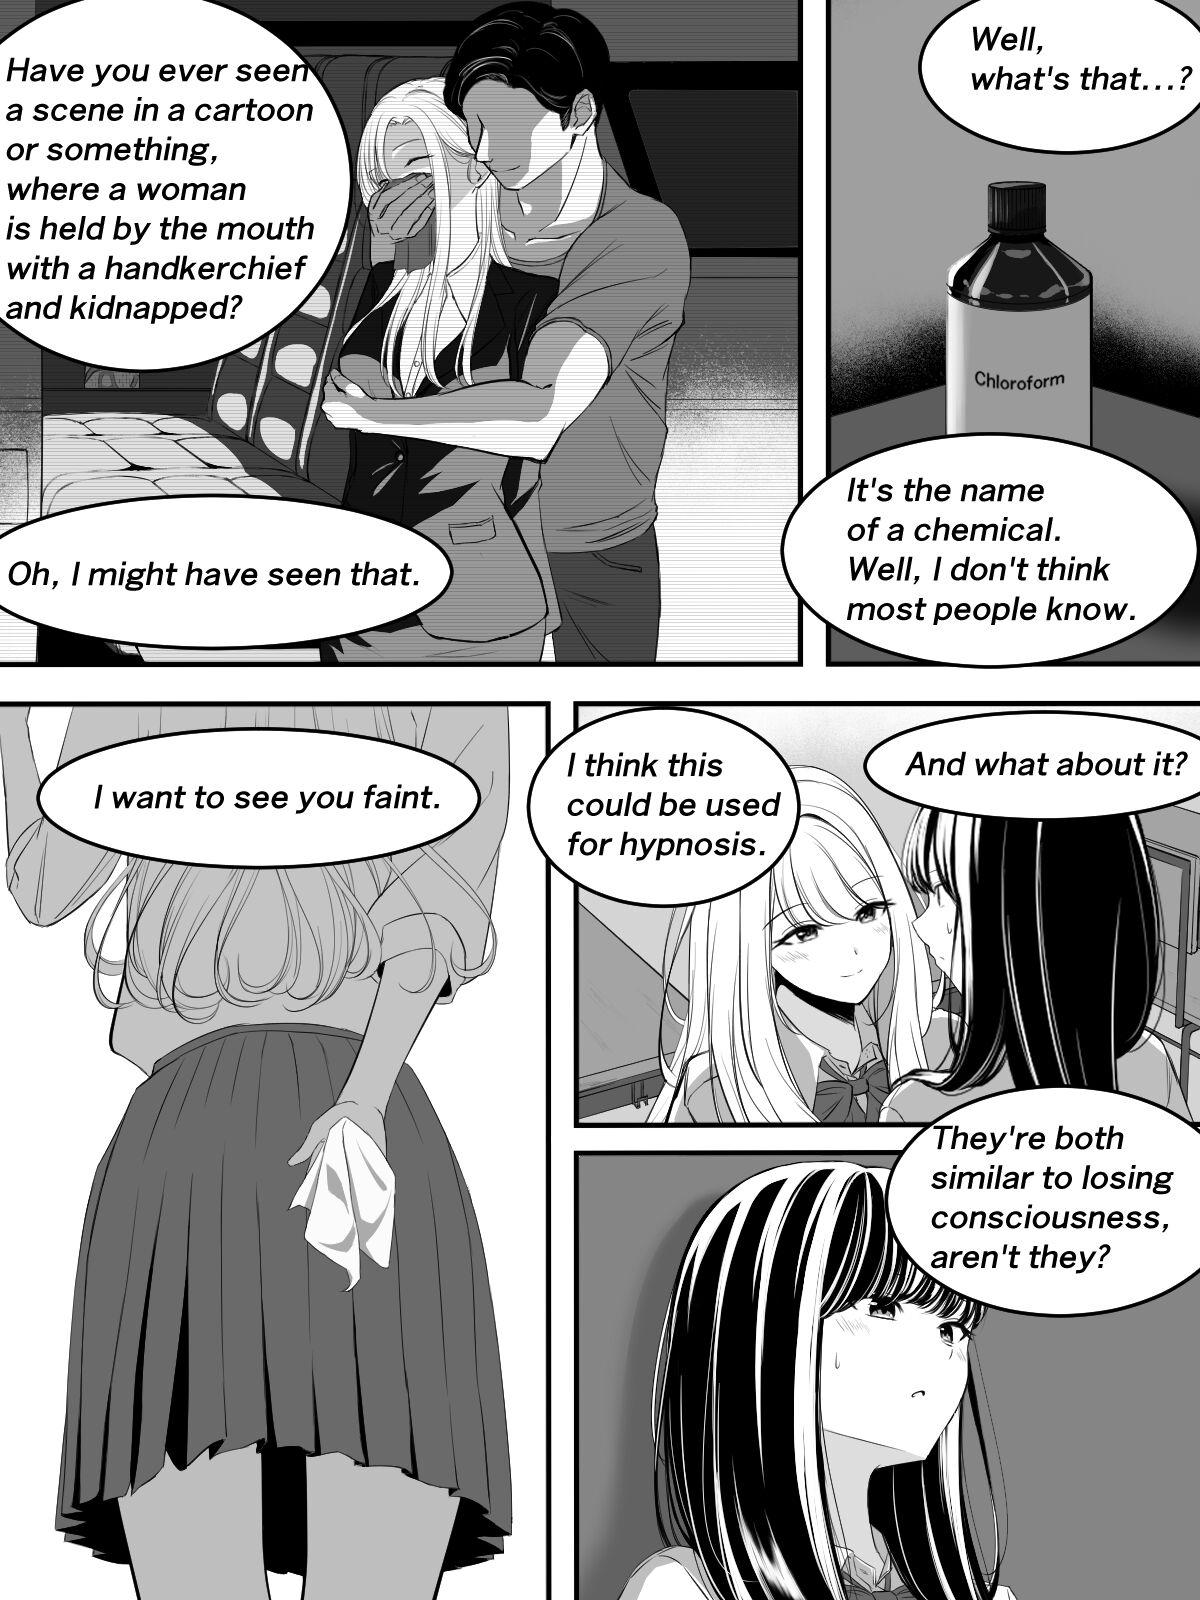 Yuri comic Part 1,2 and 3. 11